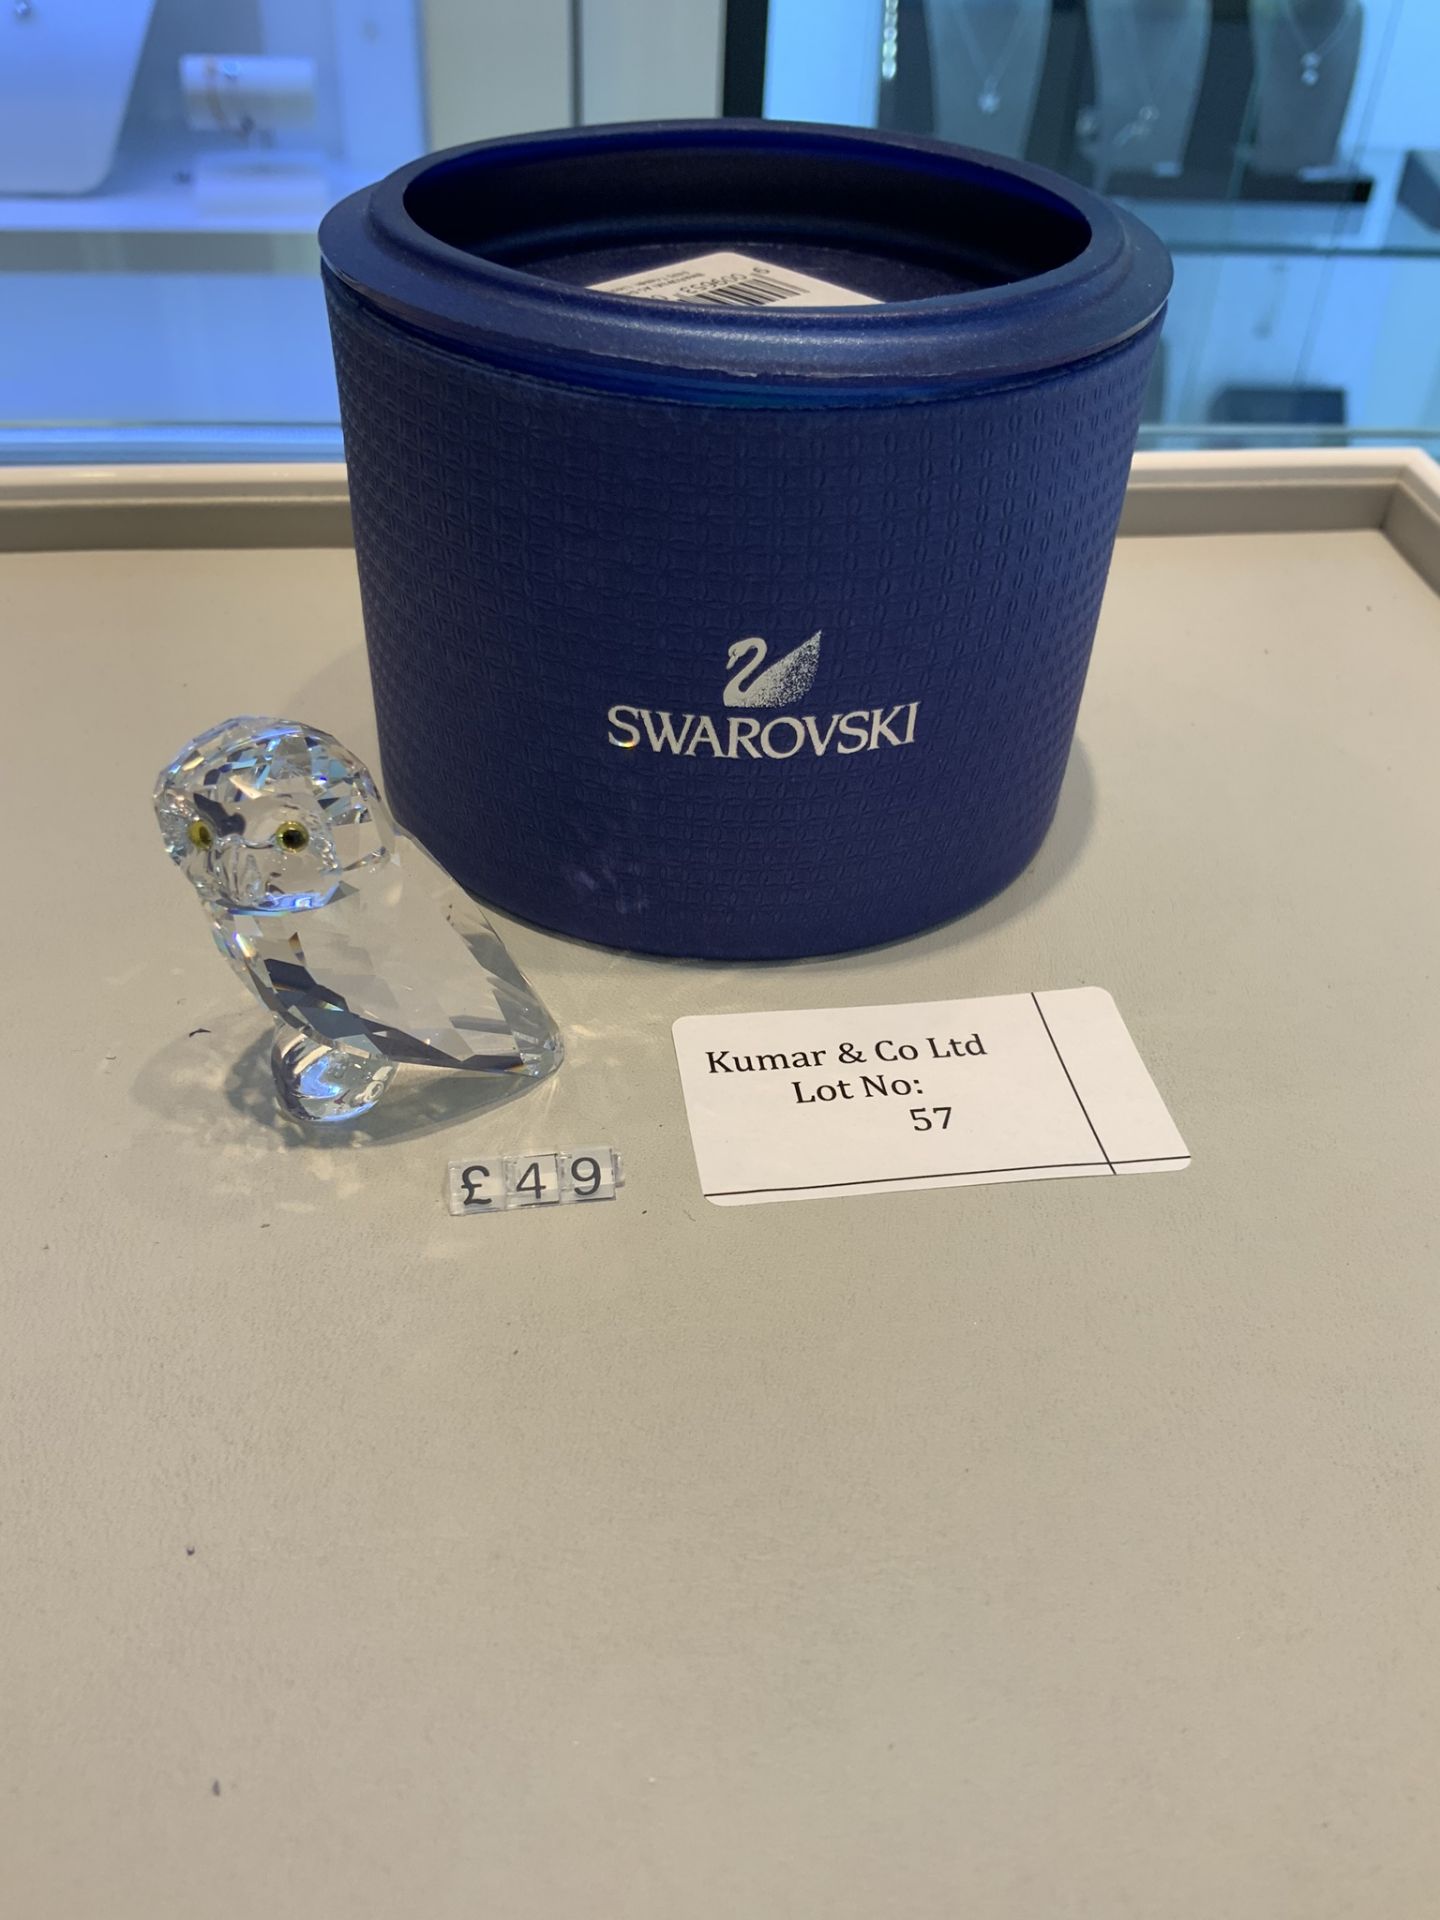 Swarovski Crystal Owlet Figurine RRP £49